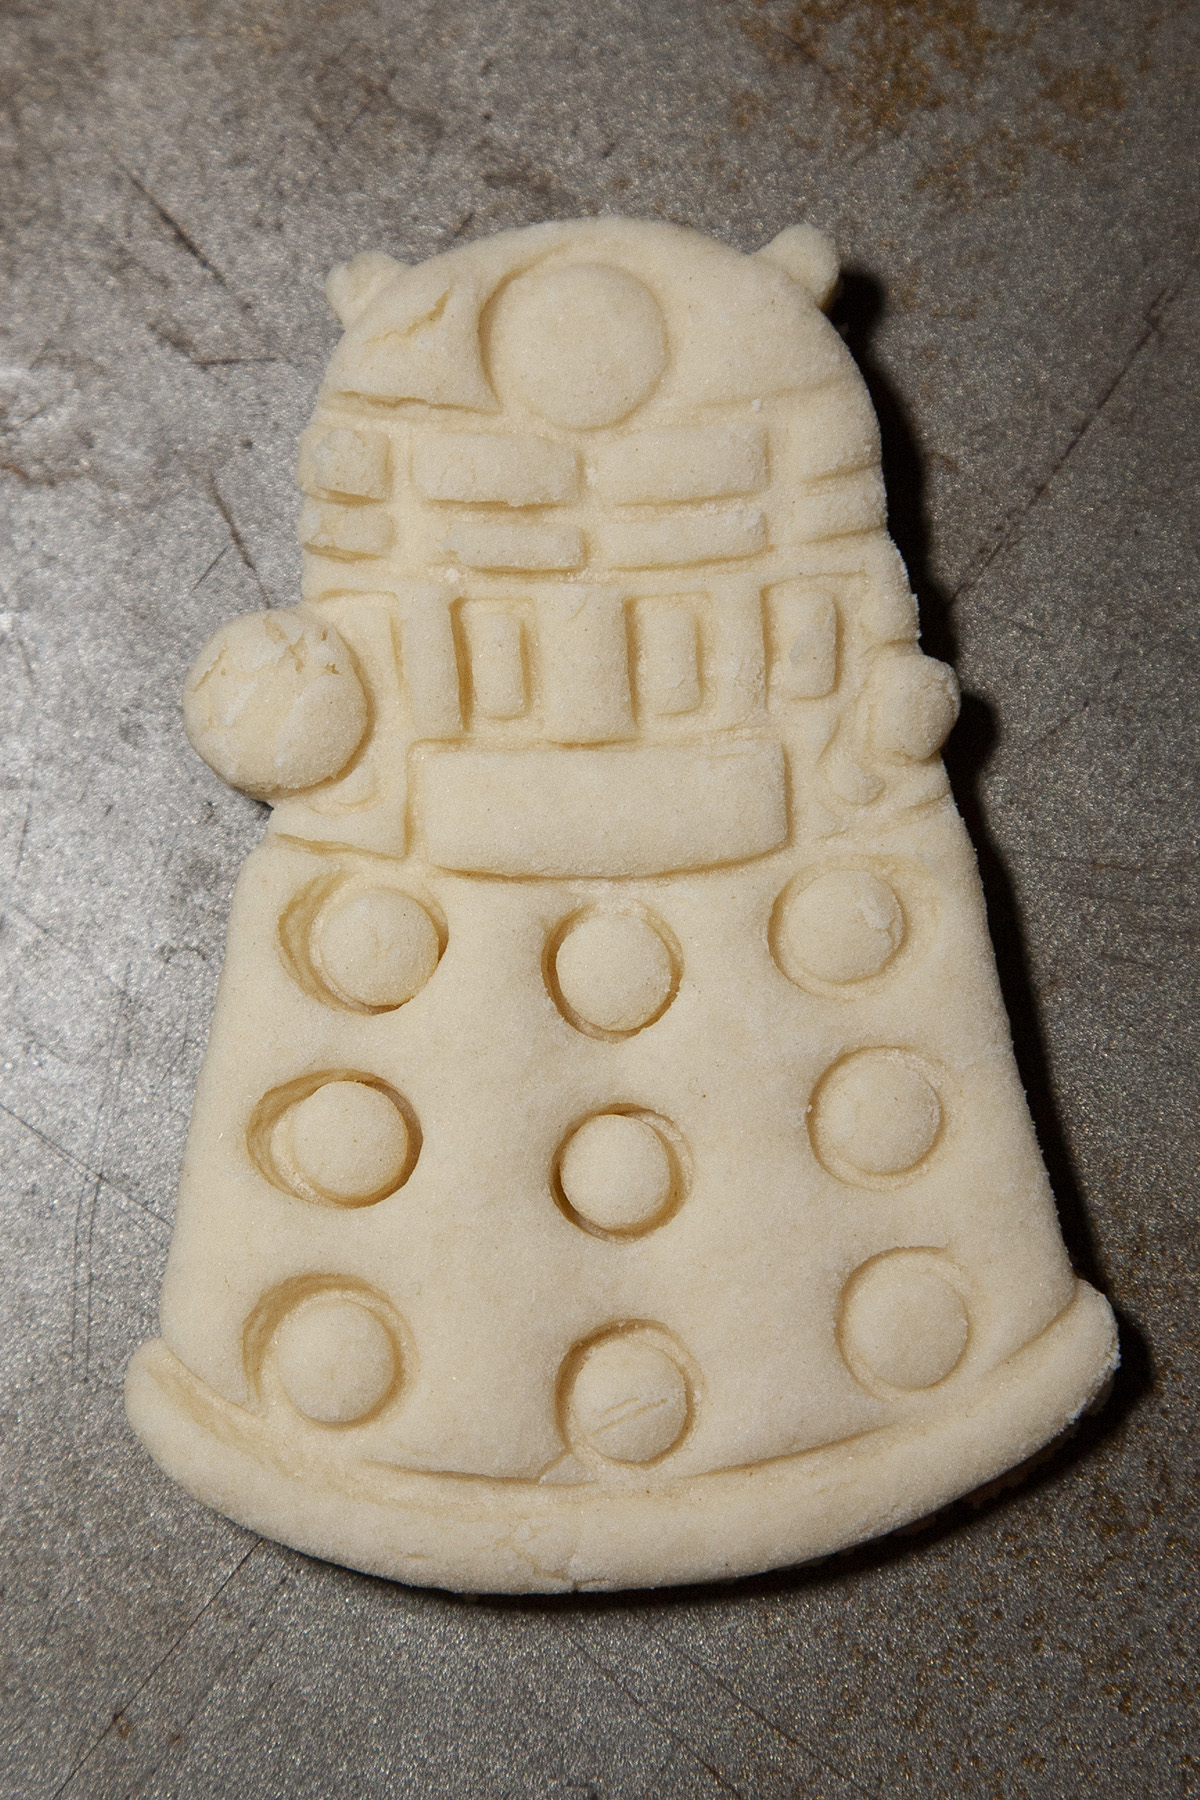 A undecorated Dalek shaped sugar cookie.